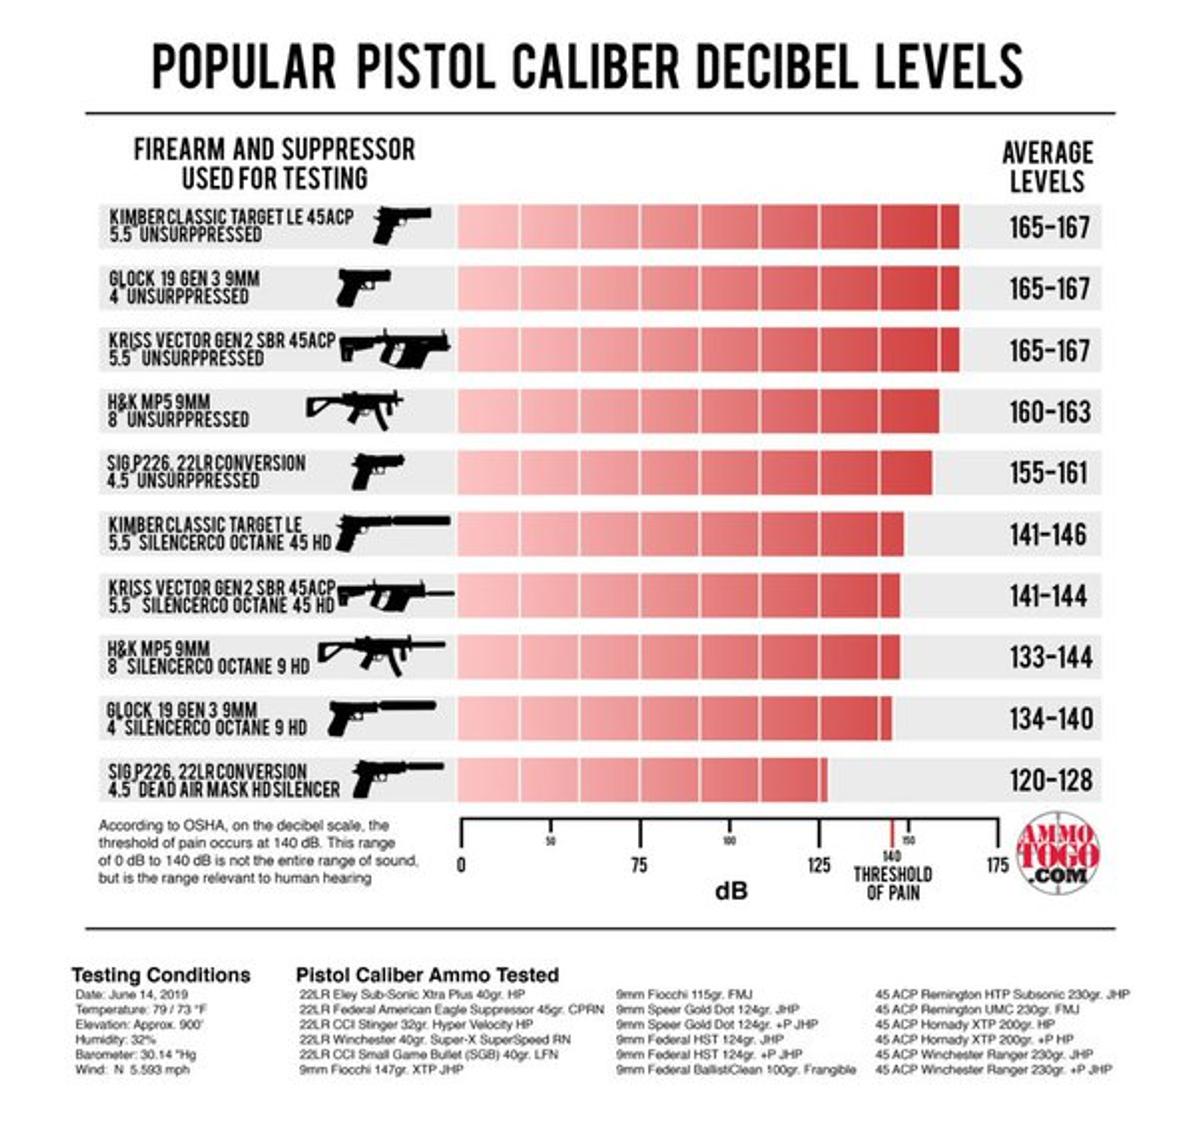 The decibel levels of popular models of pistol. (From: AmmunitionToGo)